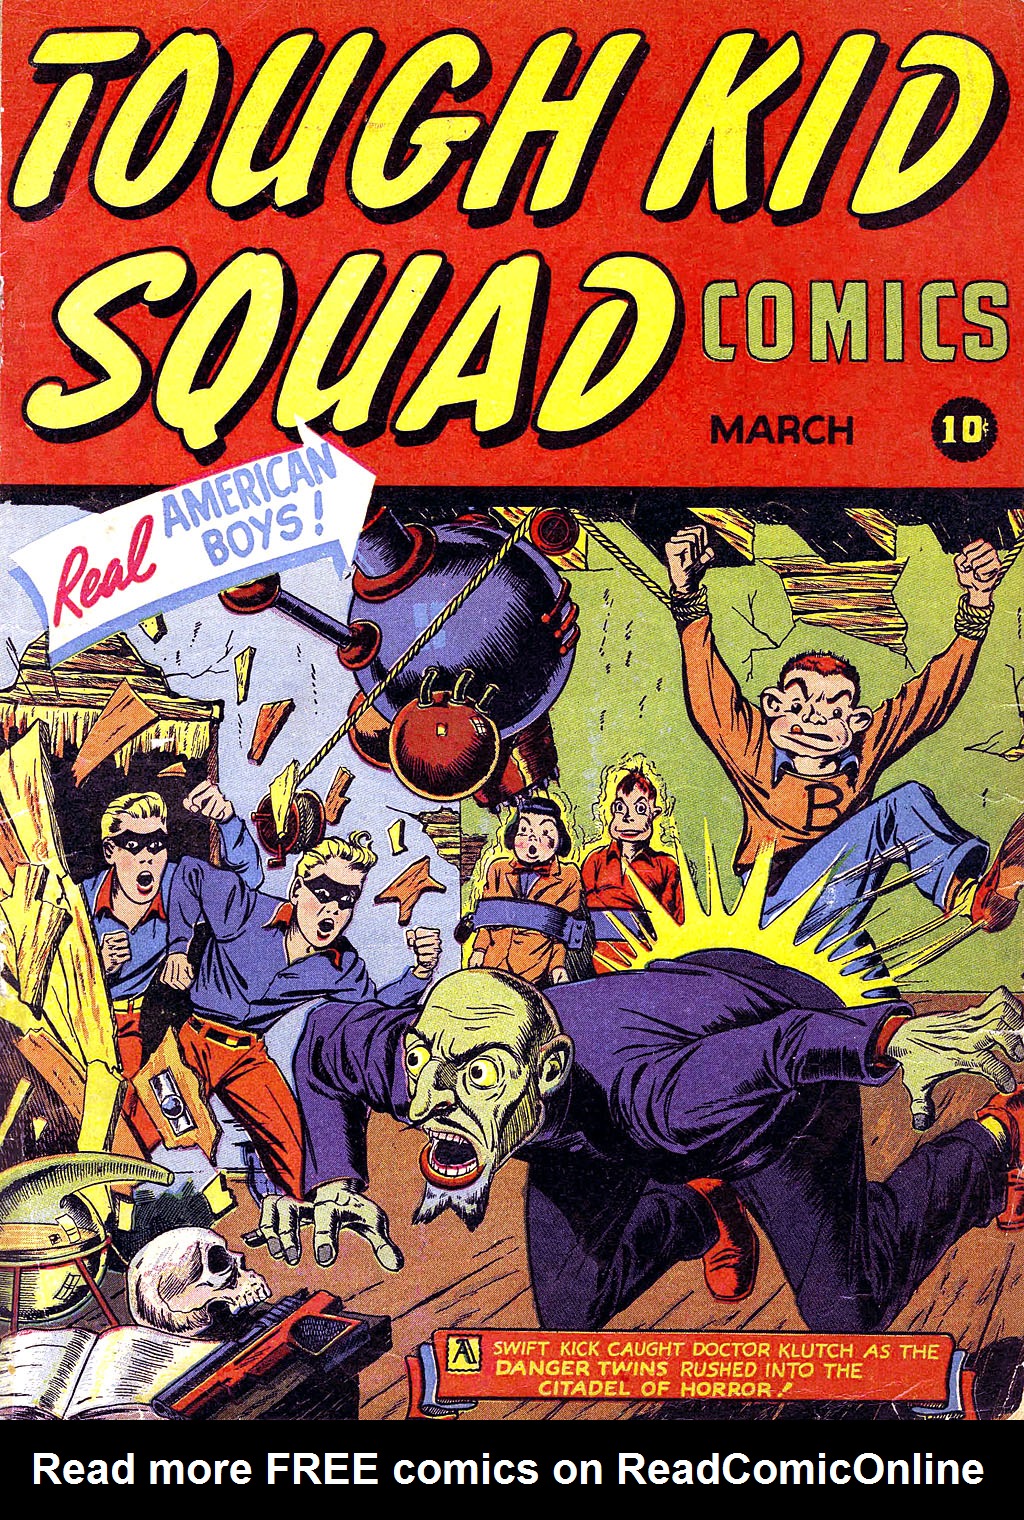 Tough Kid Squad Comics Full Page 1